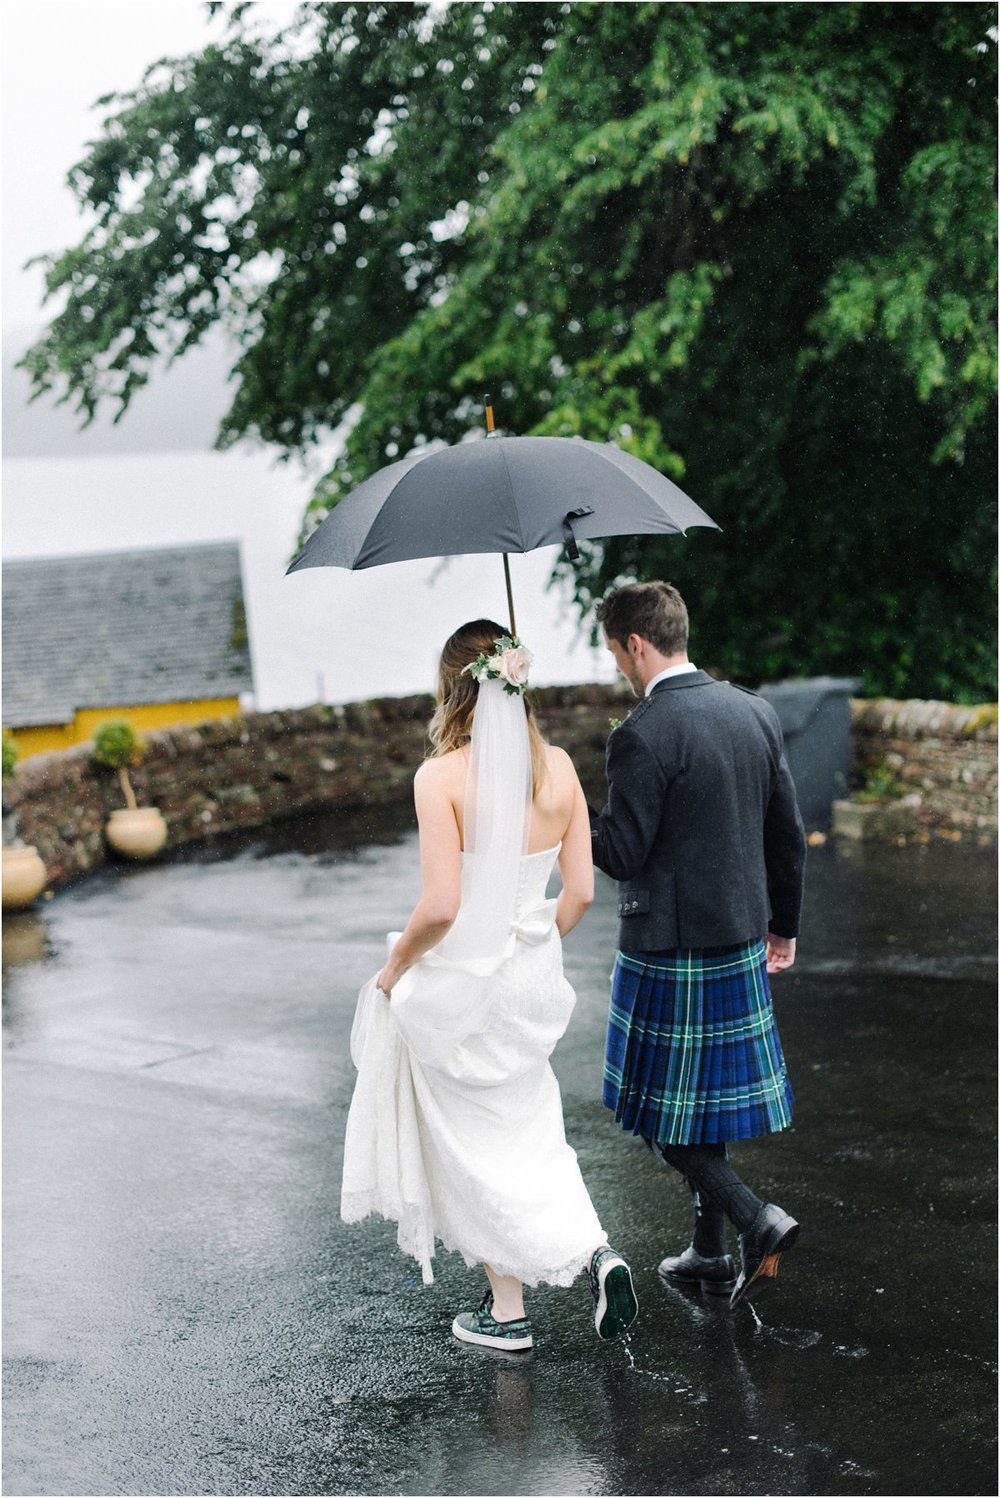  Crofts & Kowalczyk Photography Altskeith House Loch Ard wedding  